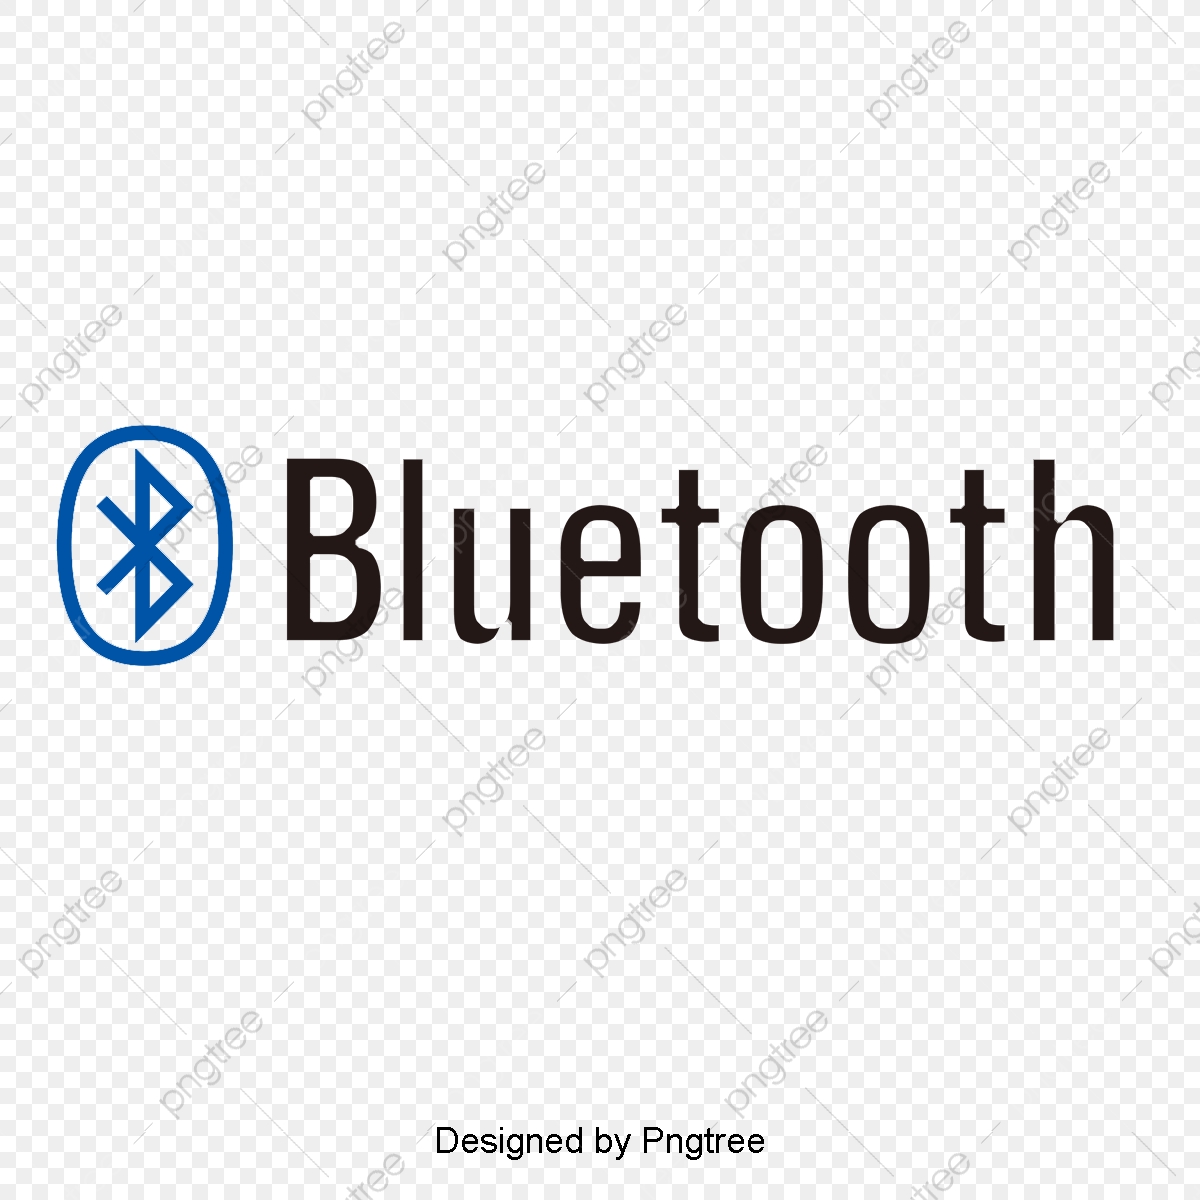 Bluetooth Logo PNG - 175755